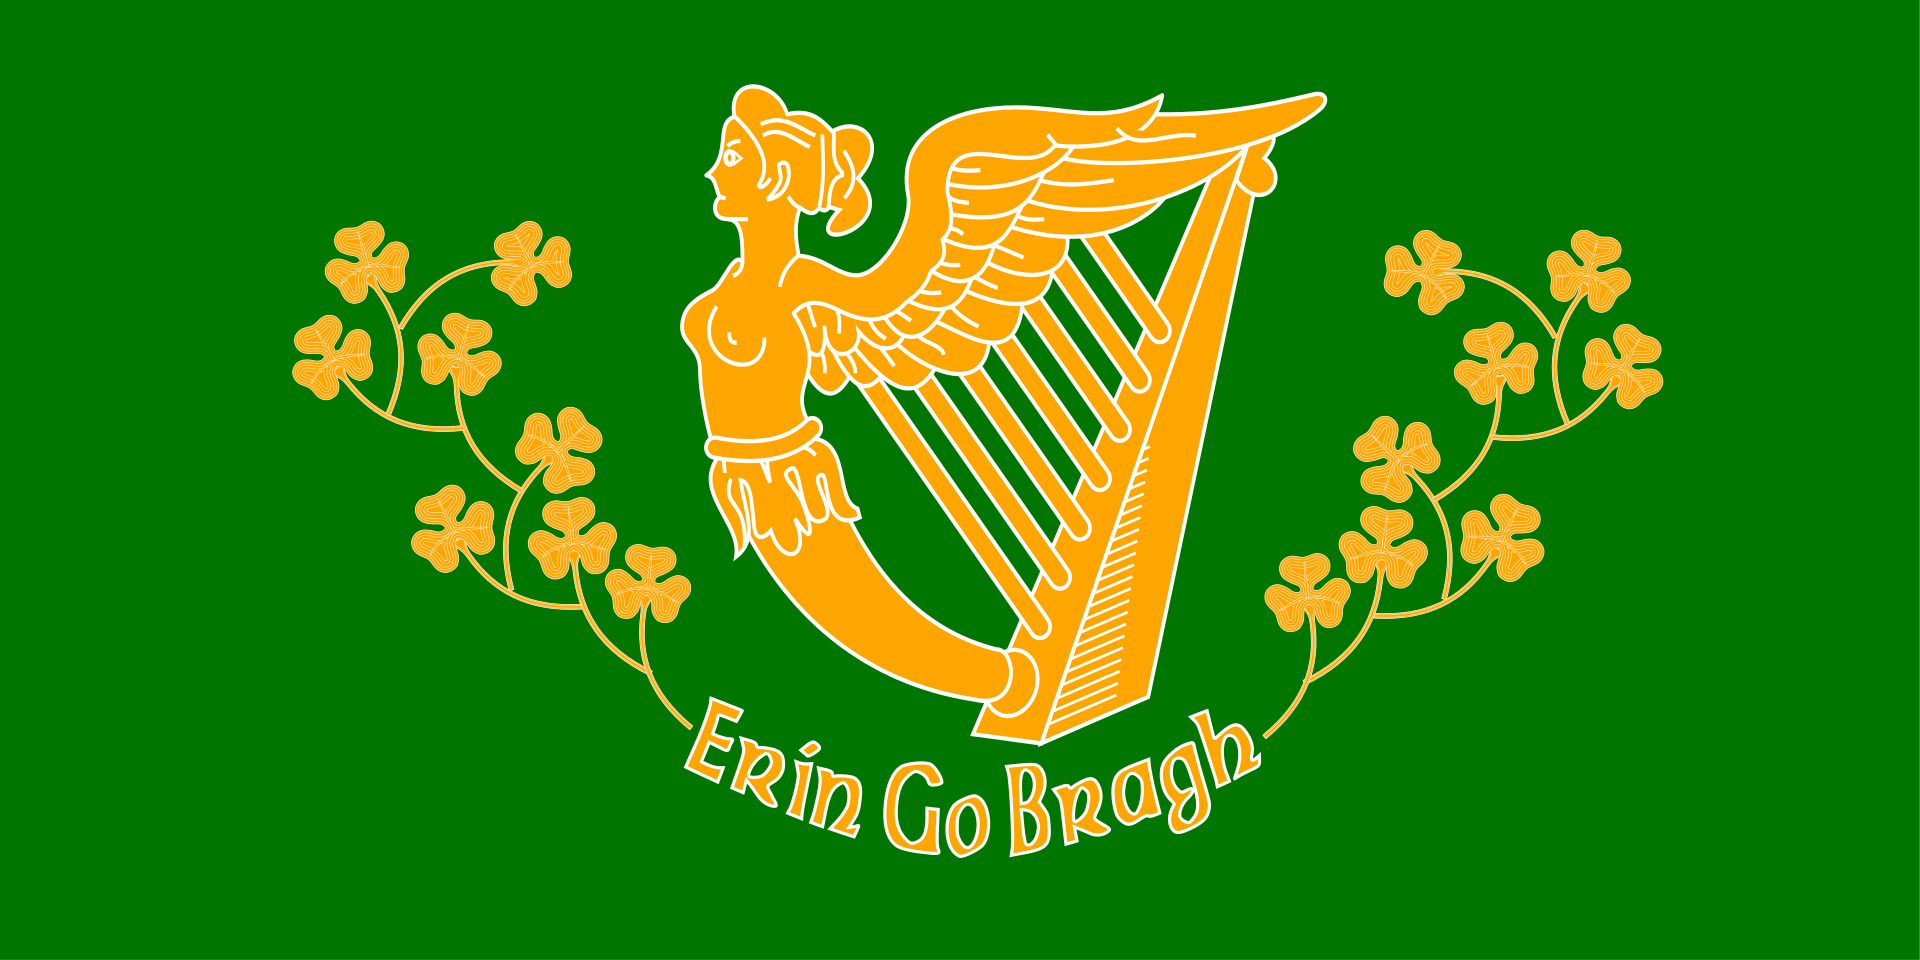 IRELAND IRISH ERIN GO BRAGH EMBROIDERED WORLD FLAG PATCH 3.5 x 2.5 INCHES